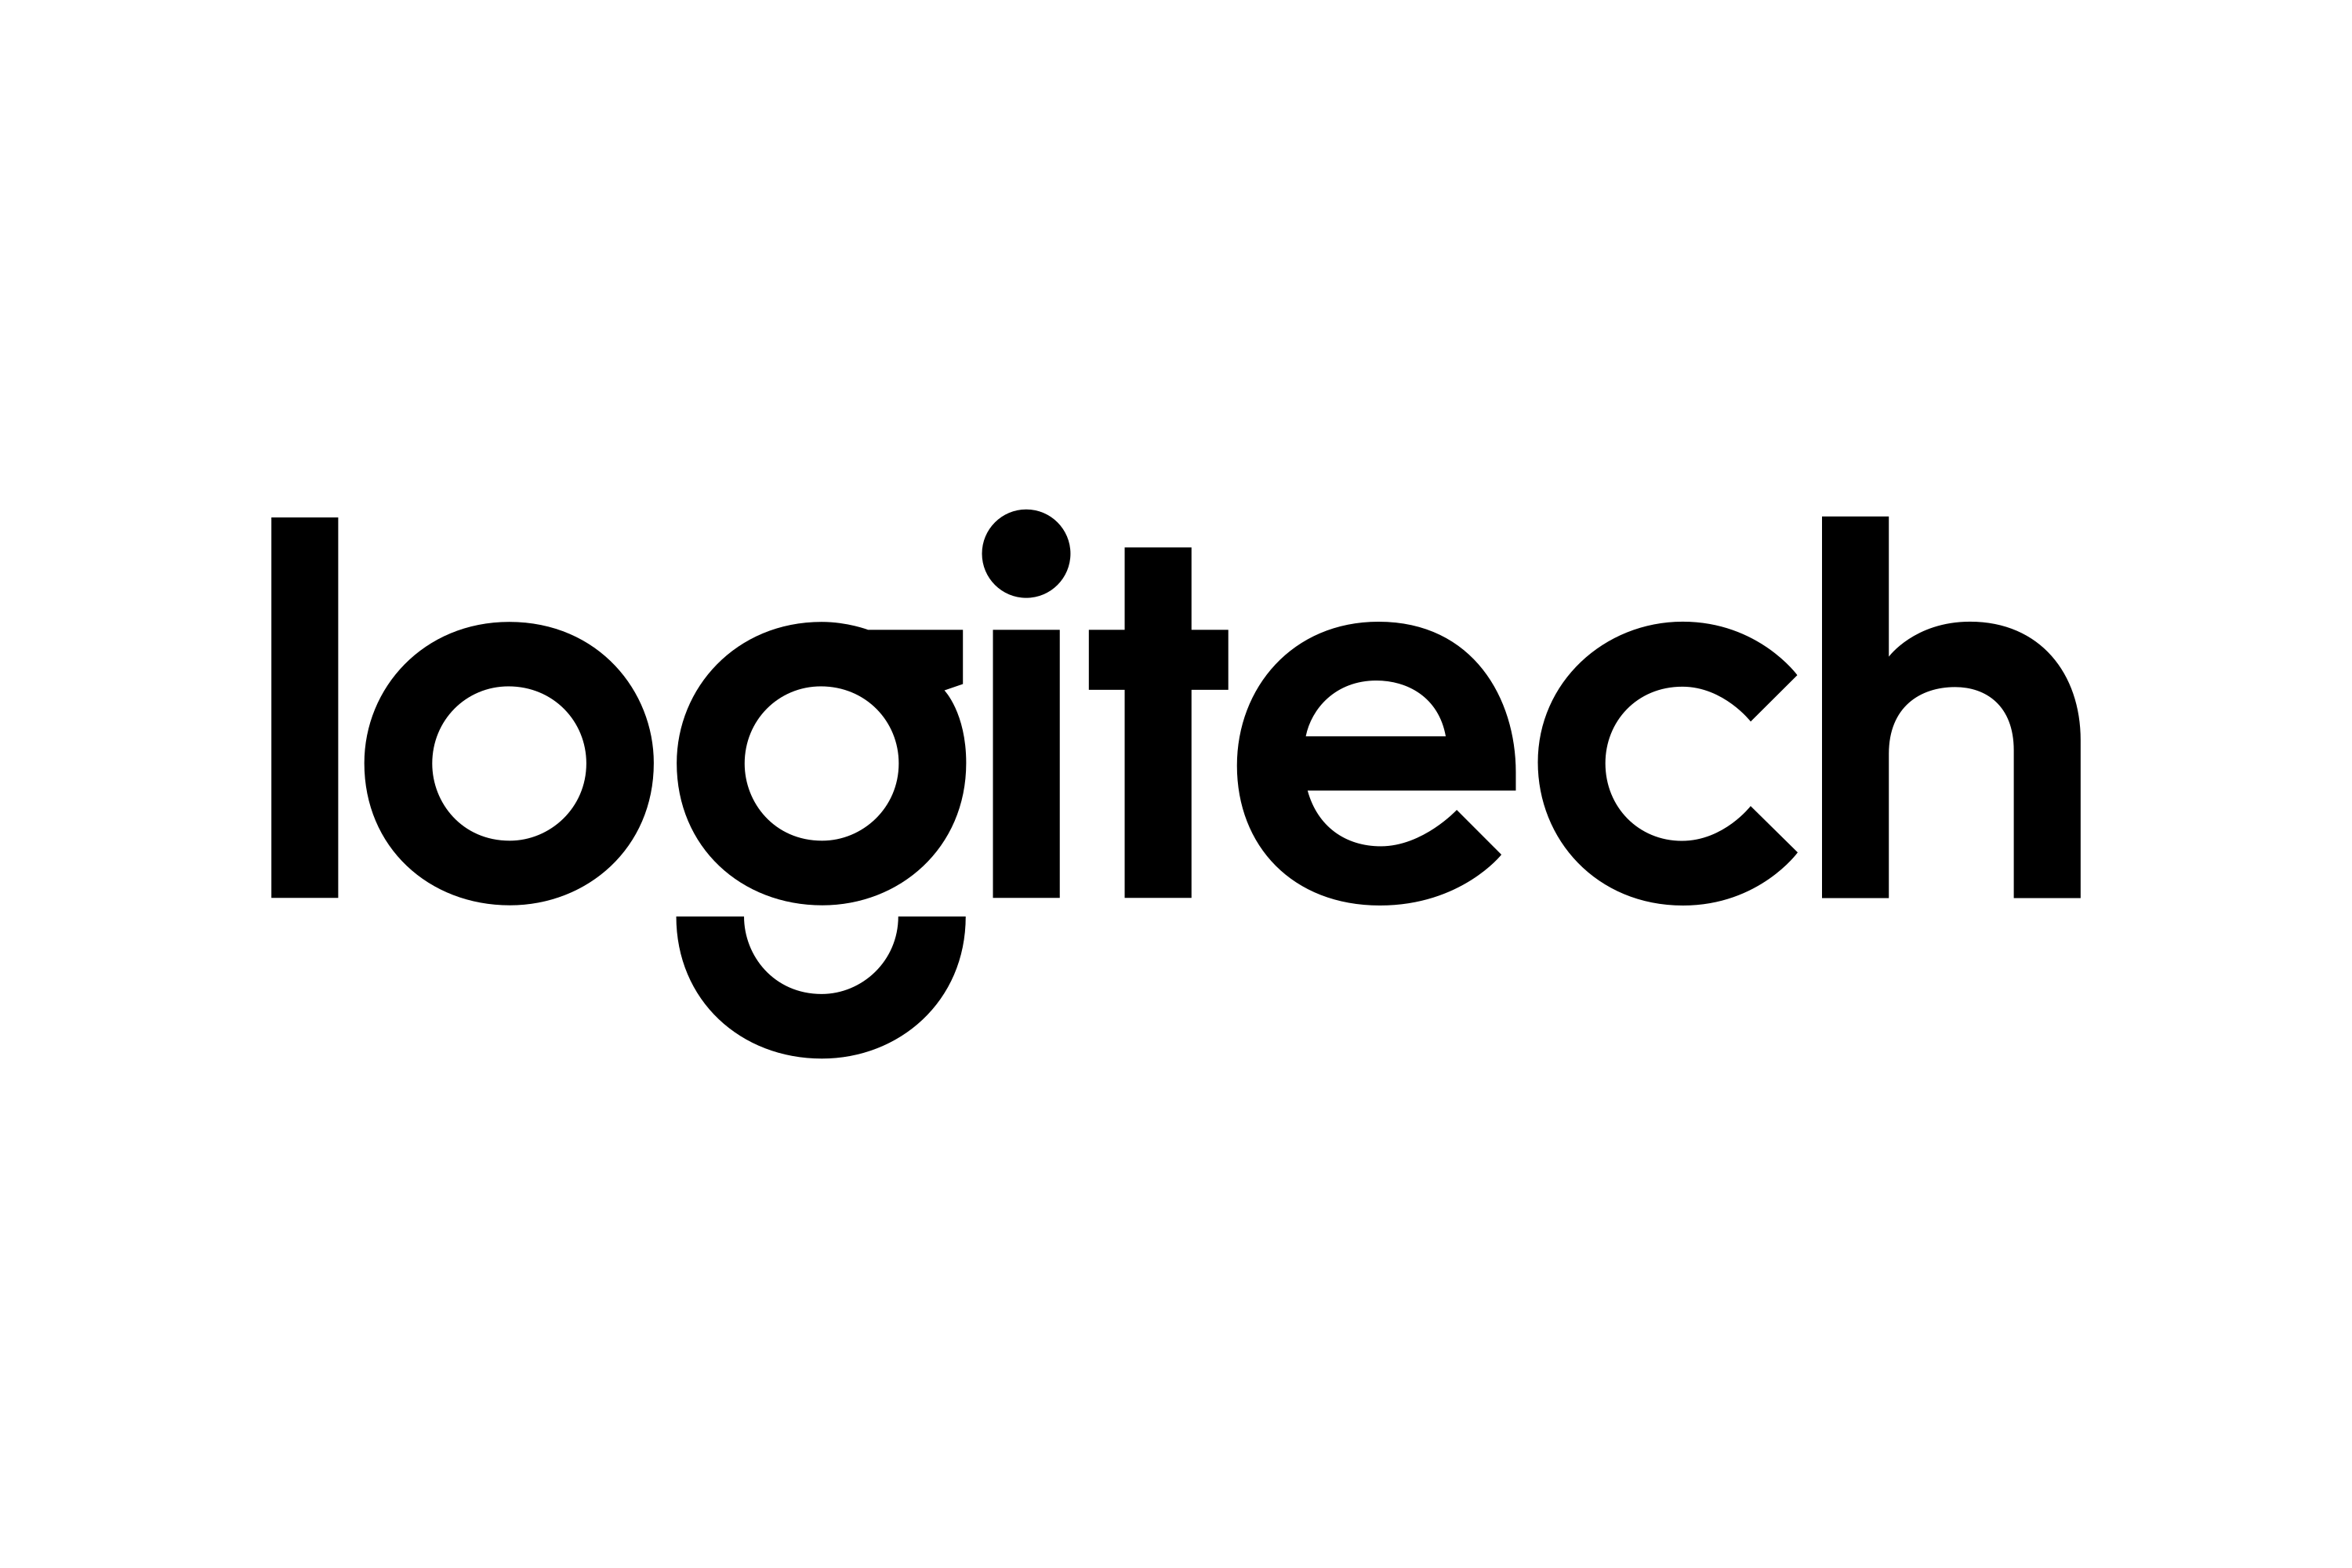 Download Logitech Logo In Svg Vector Or Png File Format   Logo.wine - Logitech, Transparent background PNG HD thumbnail